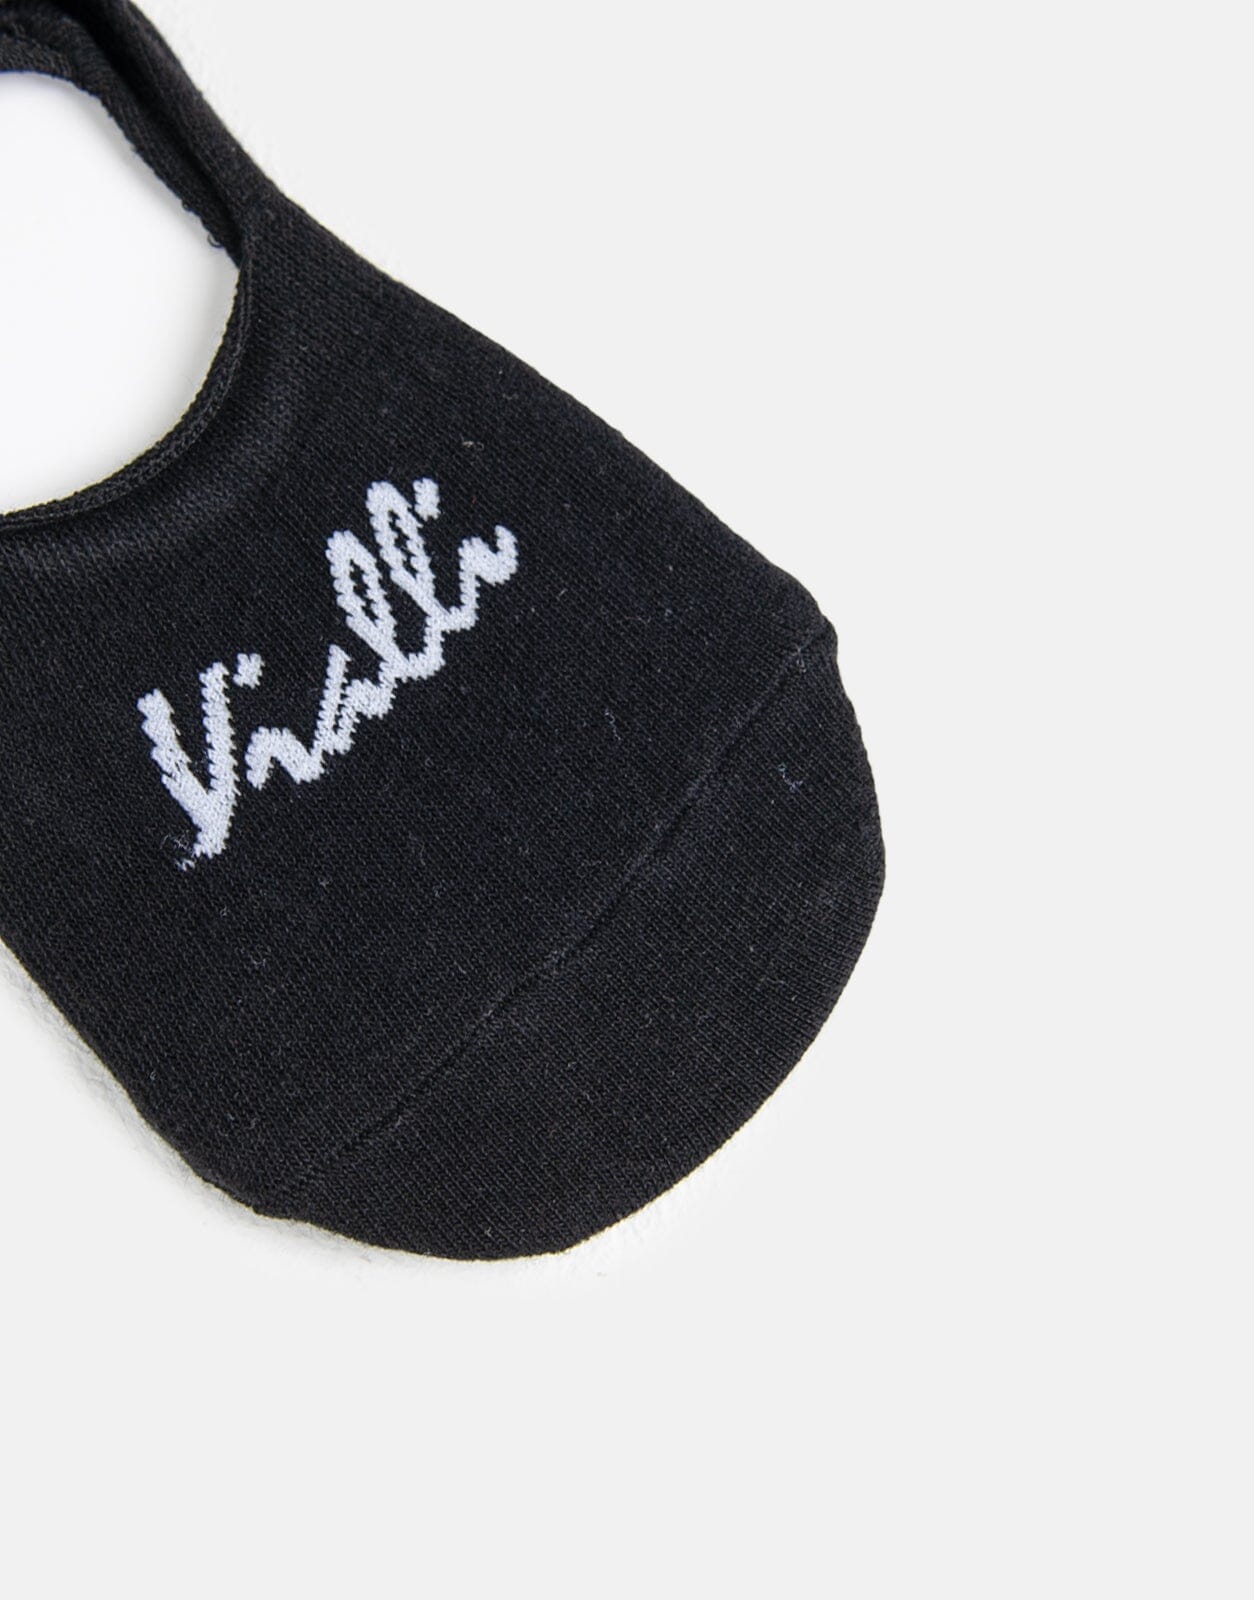 Vialli Black Secret Socks - Subwear